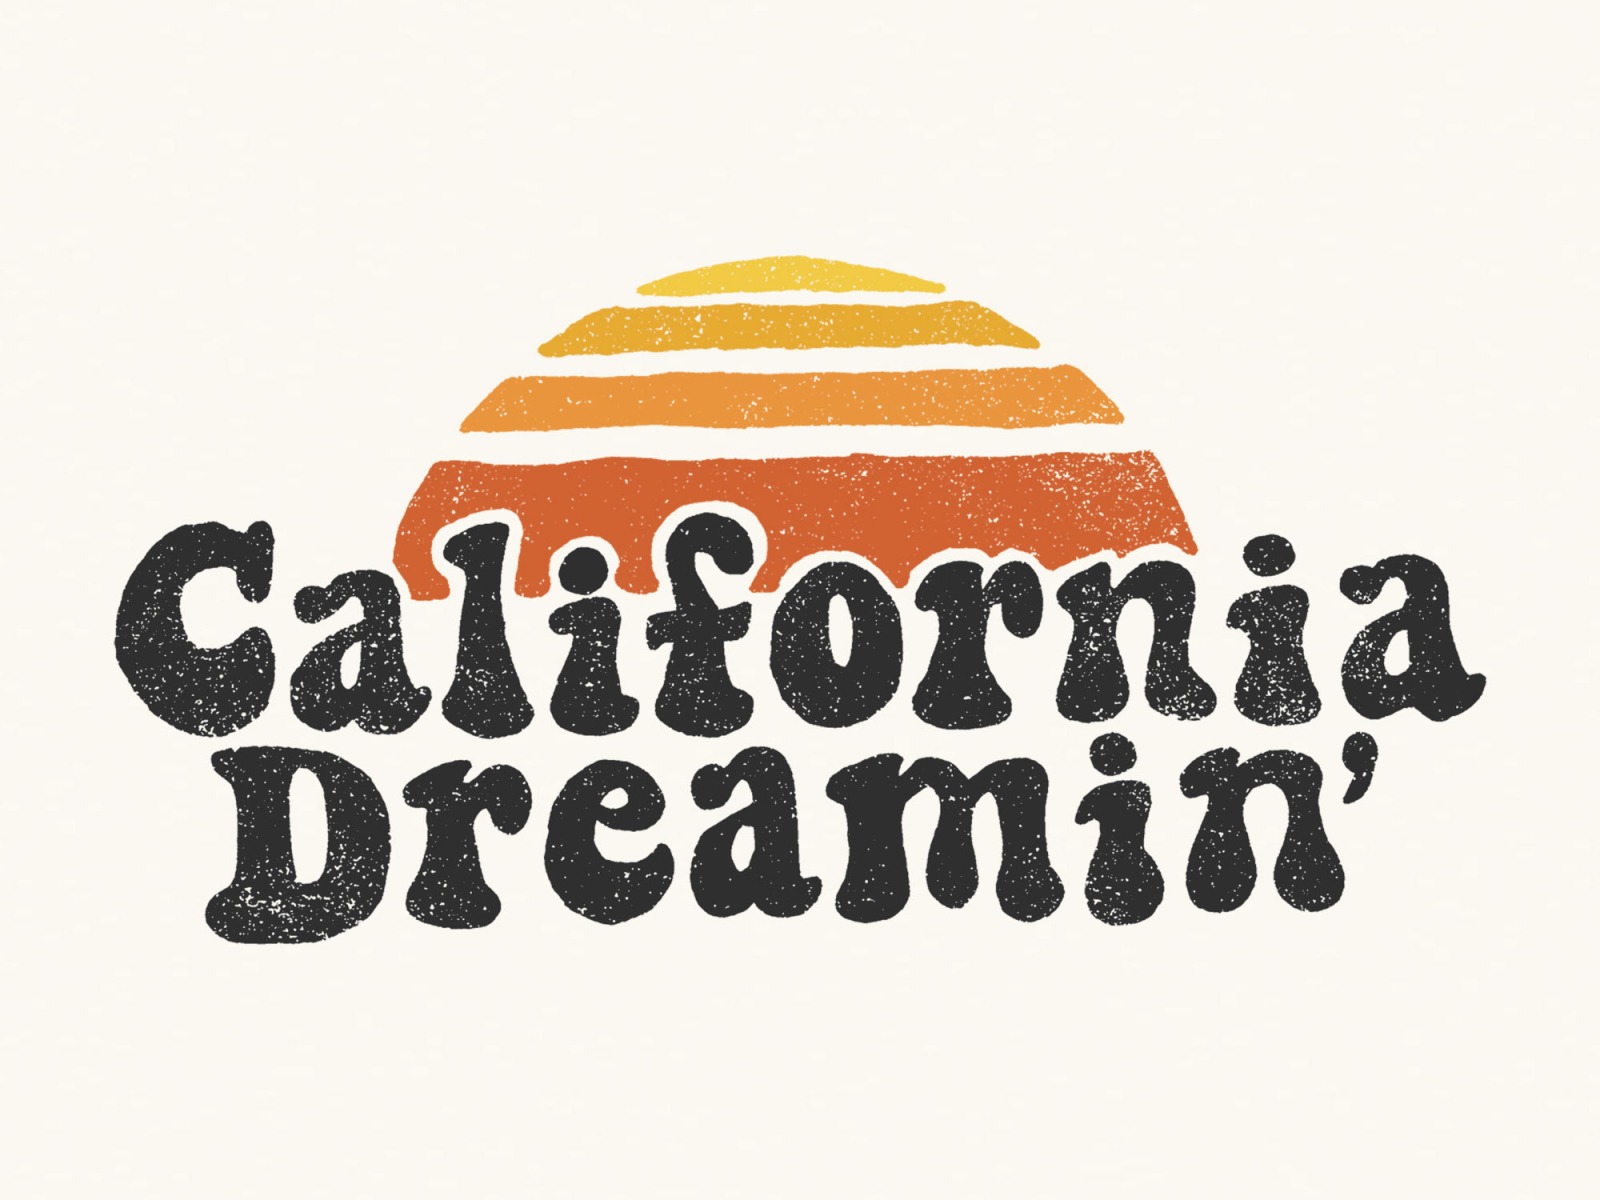 California Dreamin' by spencerventure on Dribbble